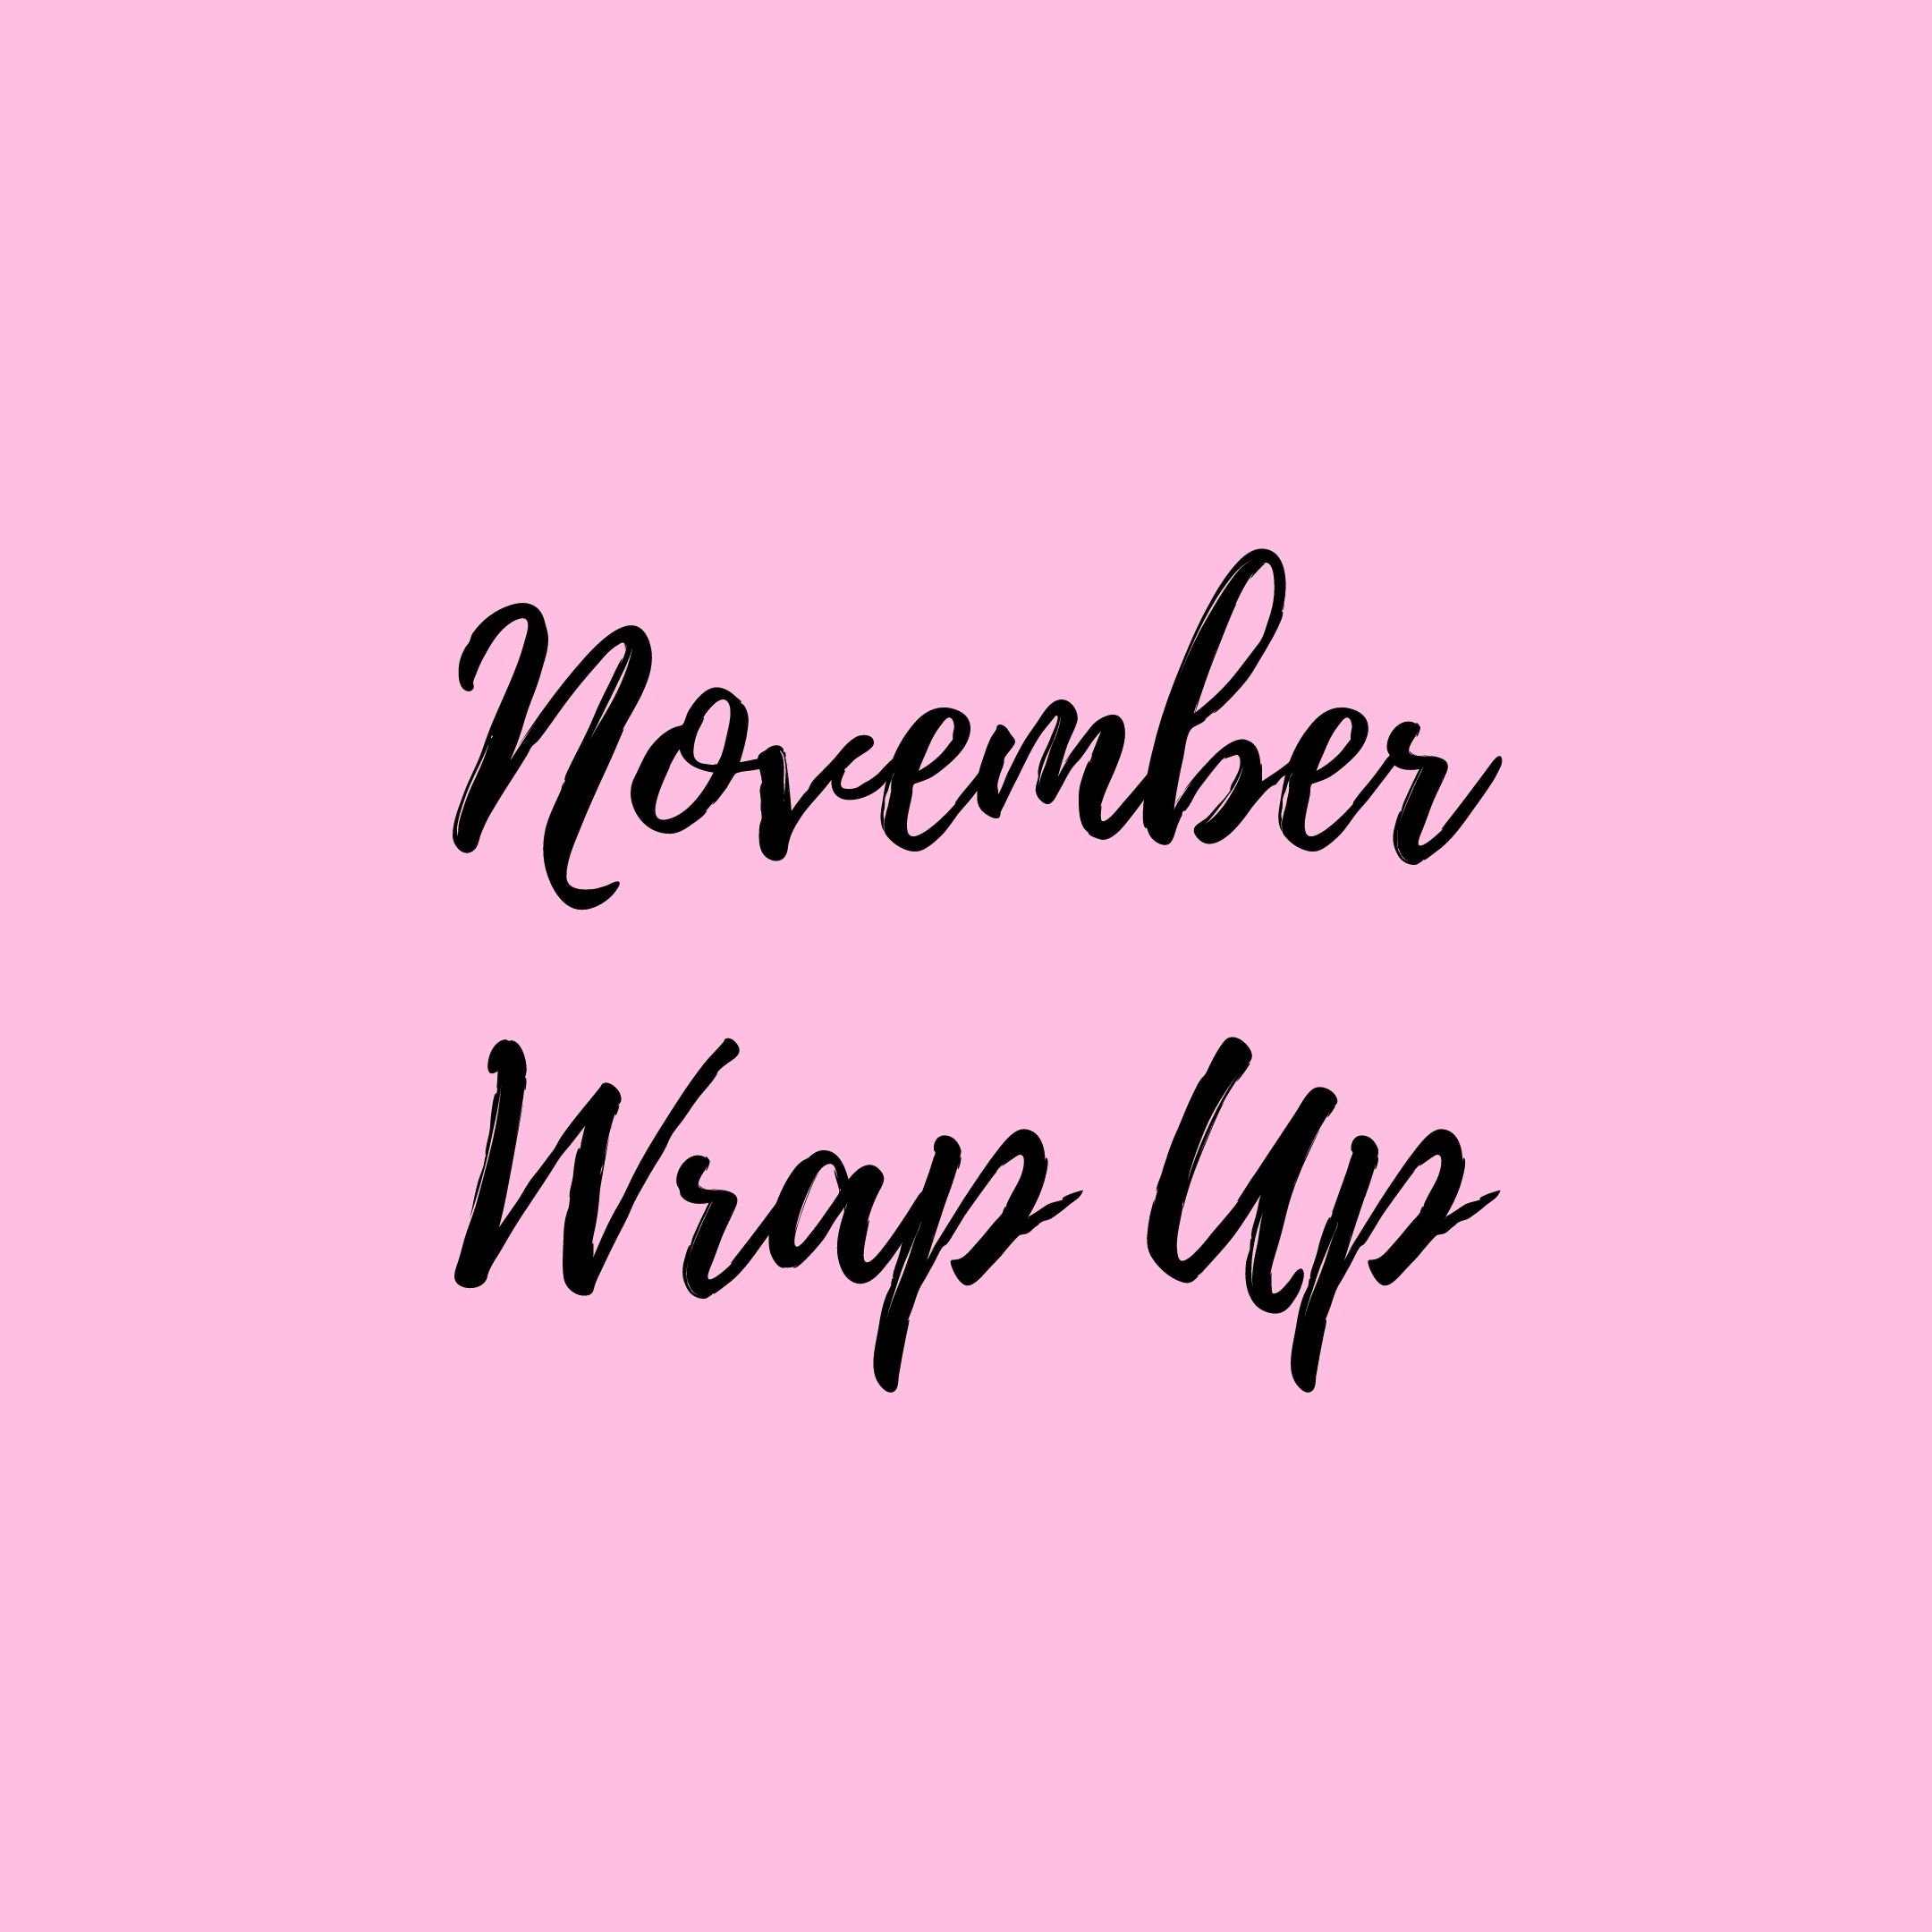 November wrap up